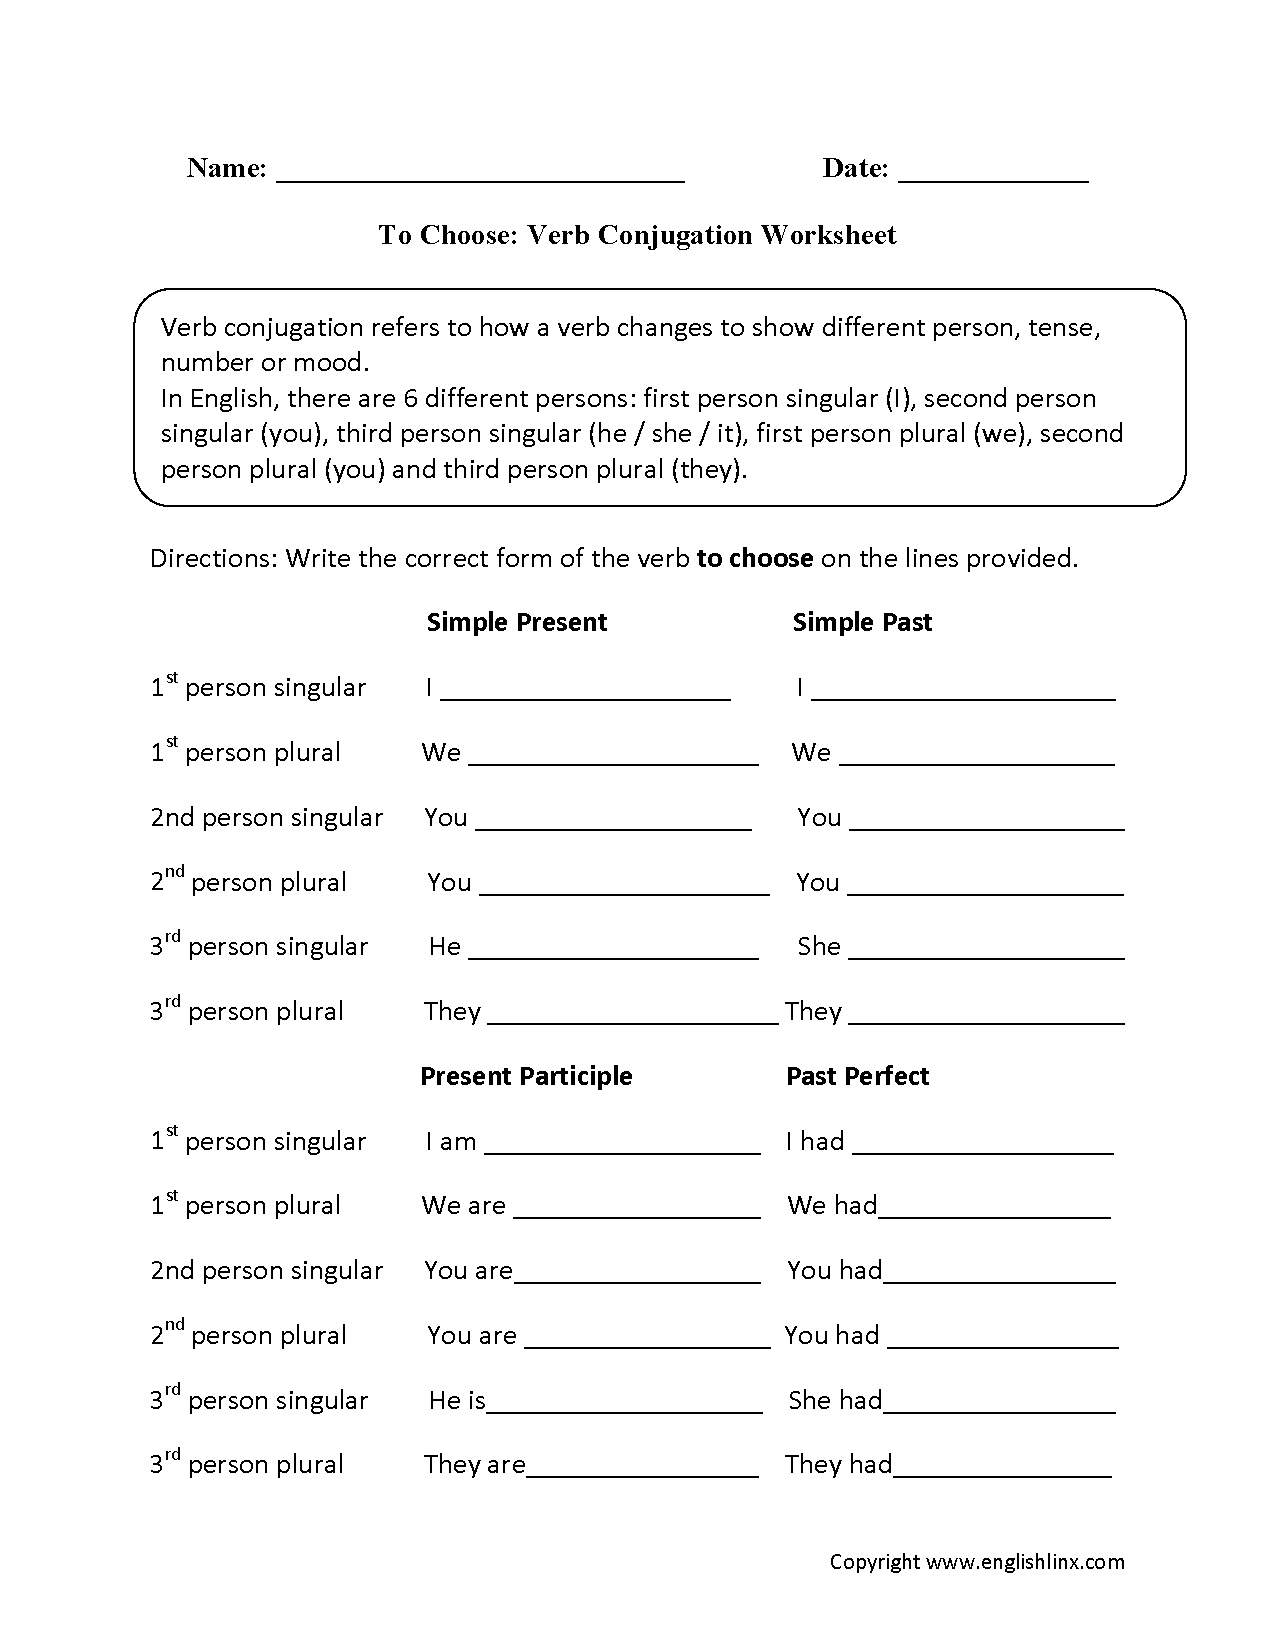 To Choose Verb Conjugation Worksheets